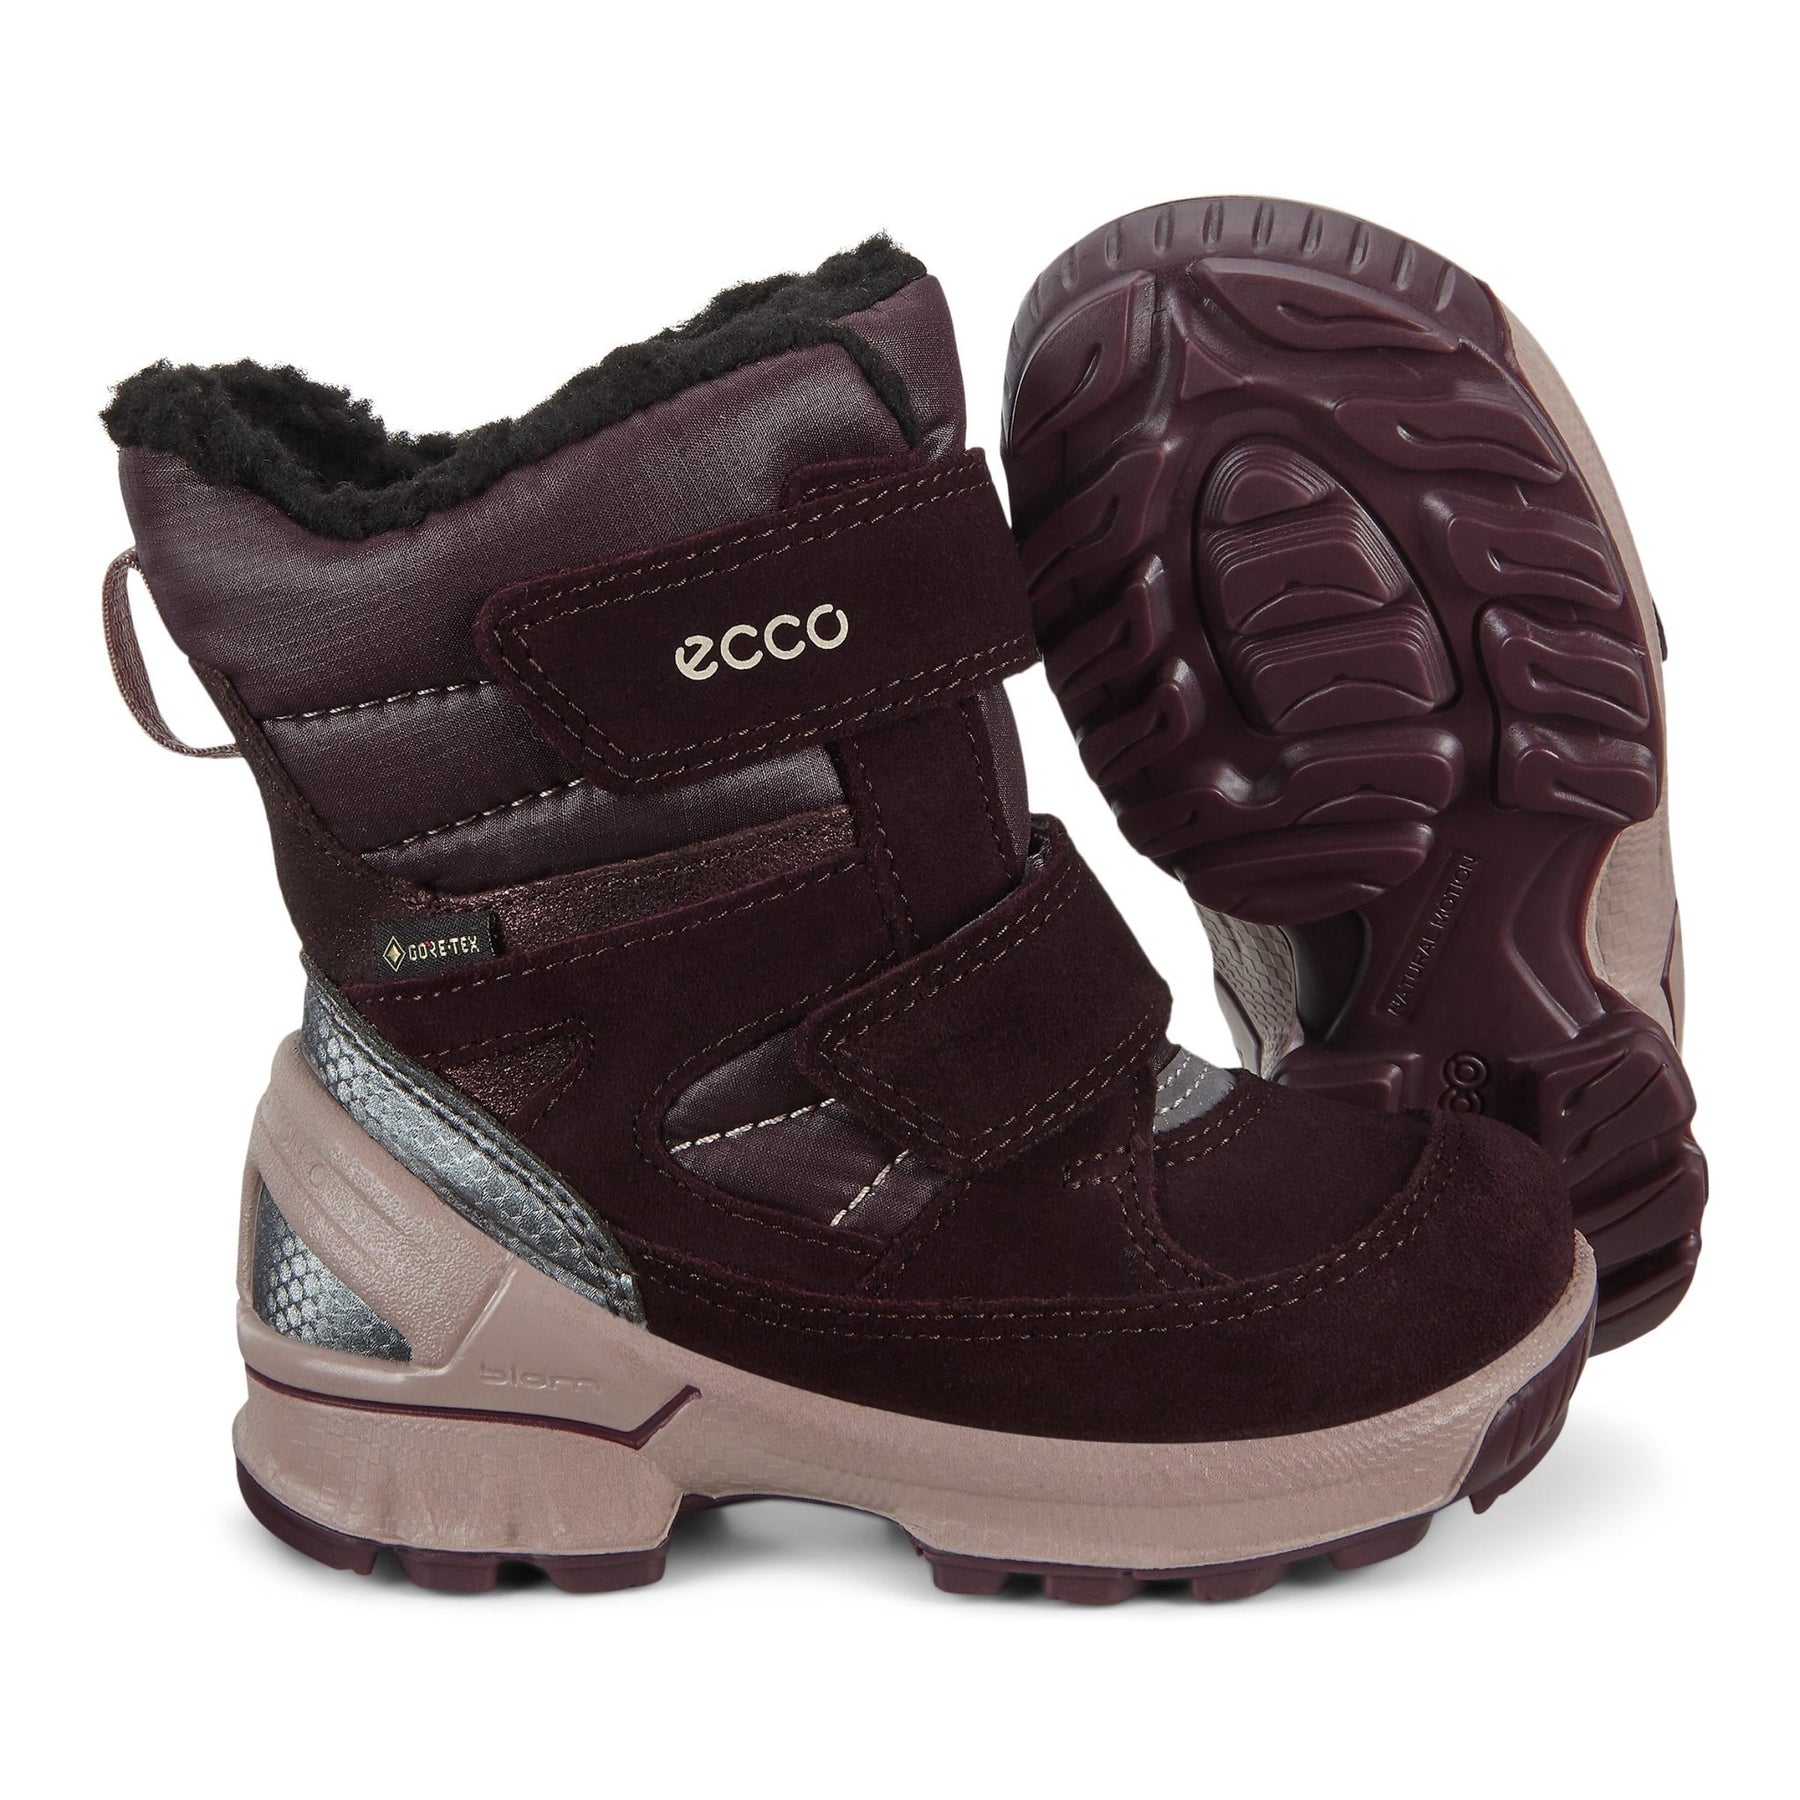 biom hike støvle fra Ecco